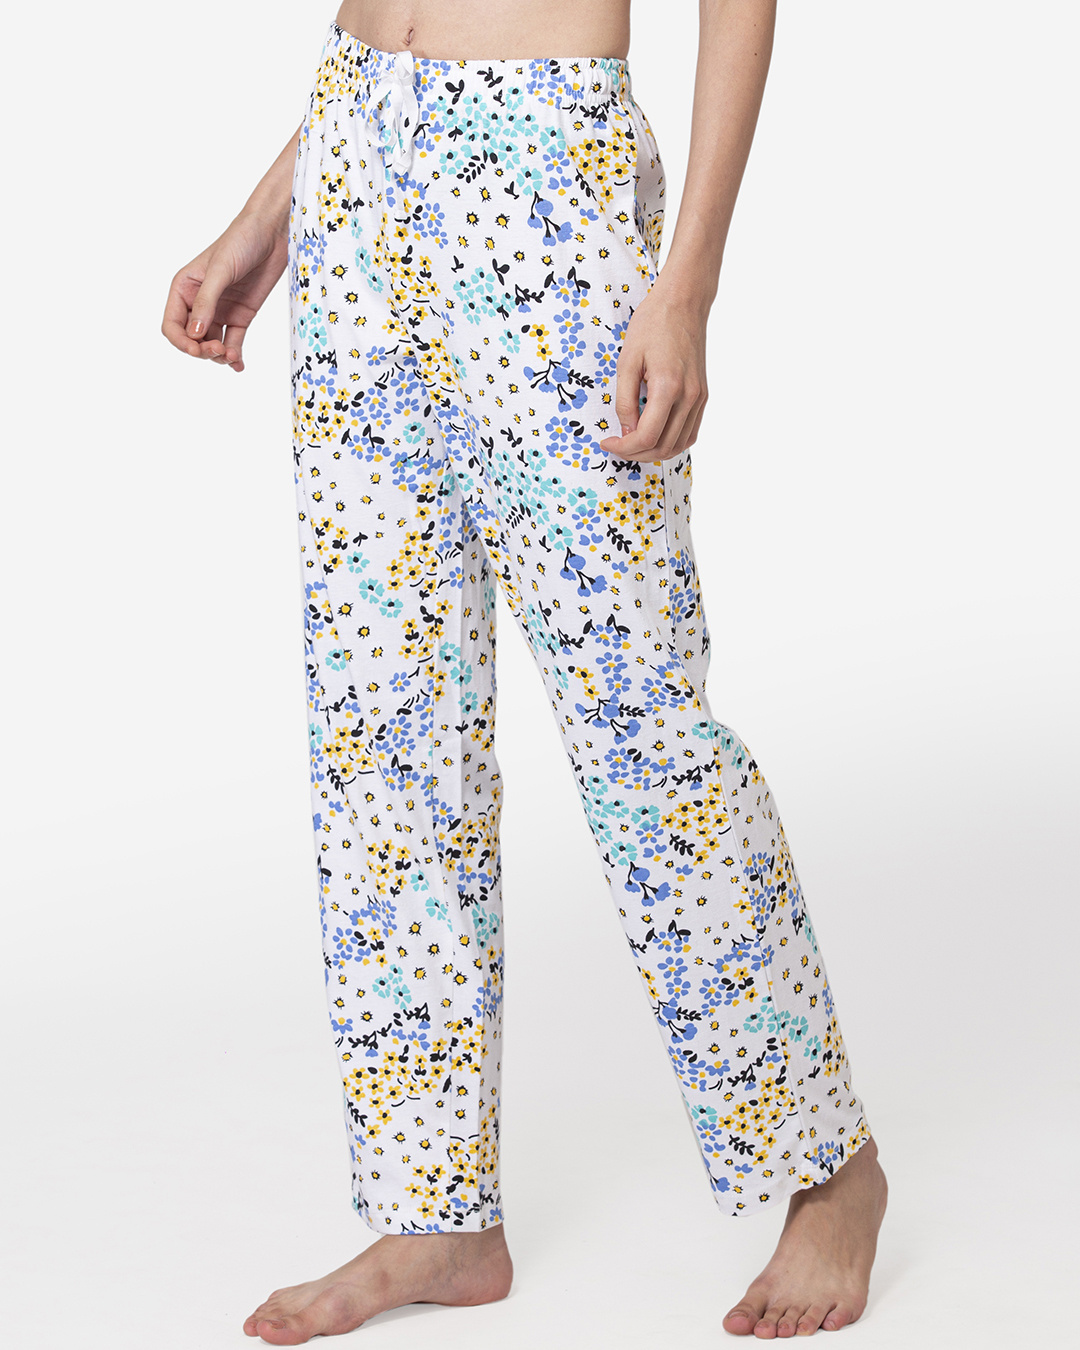 Shop Women's White All Over Printed Pyjamas-Back